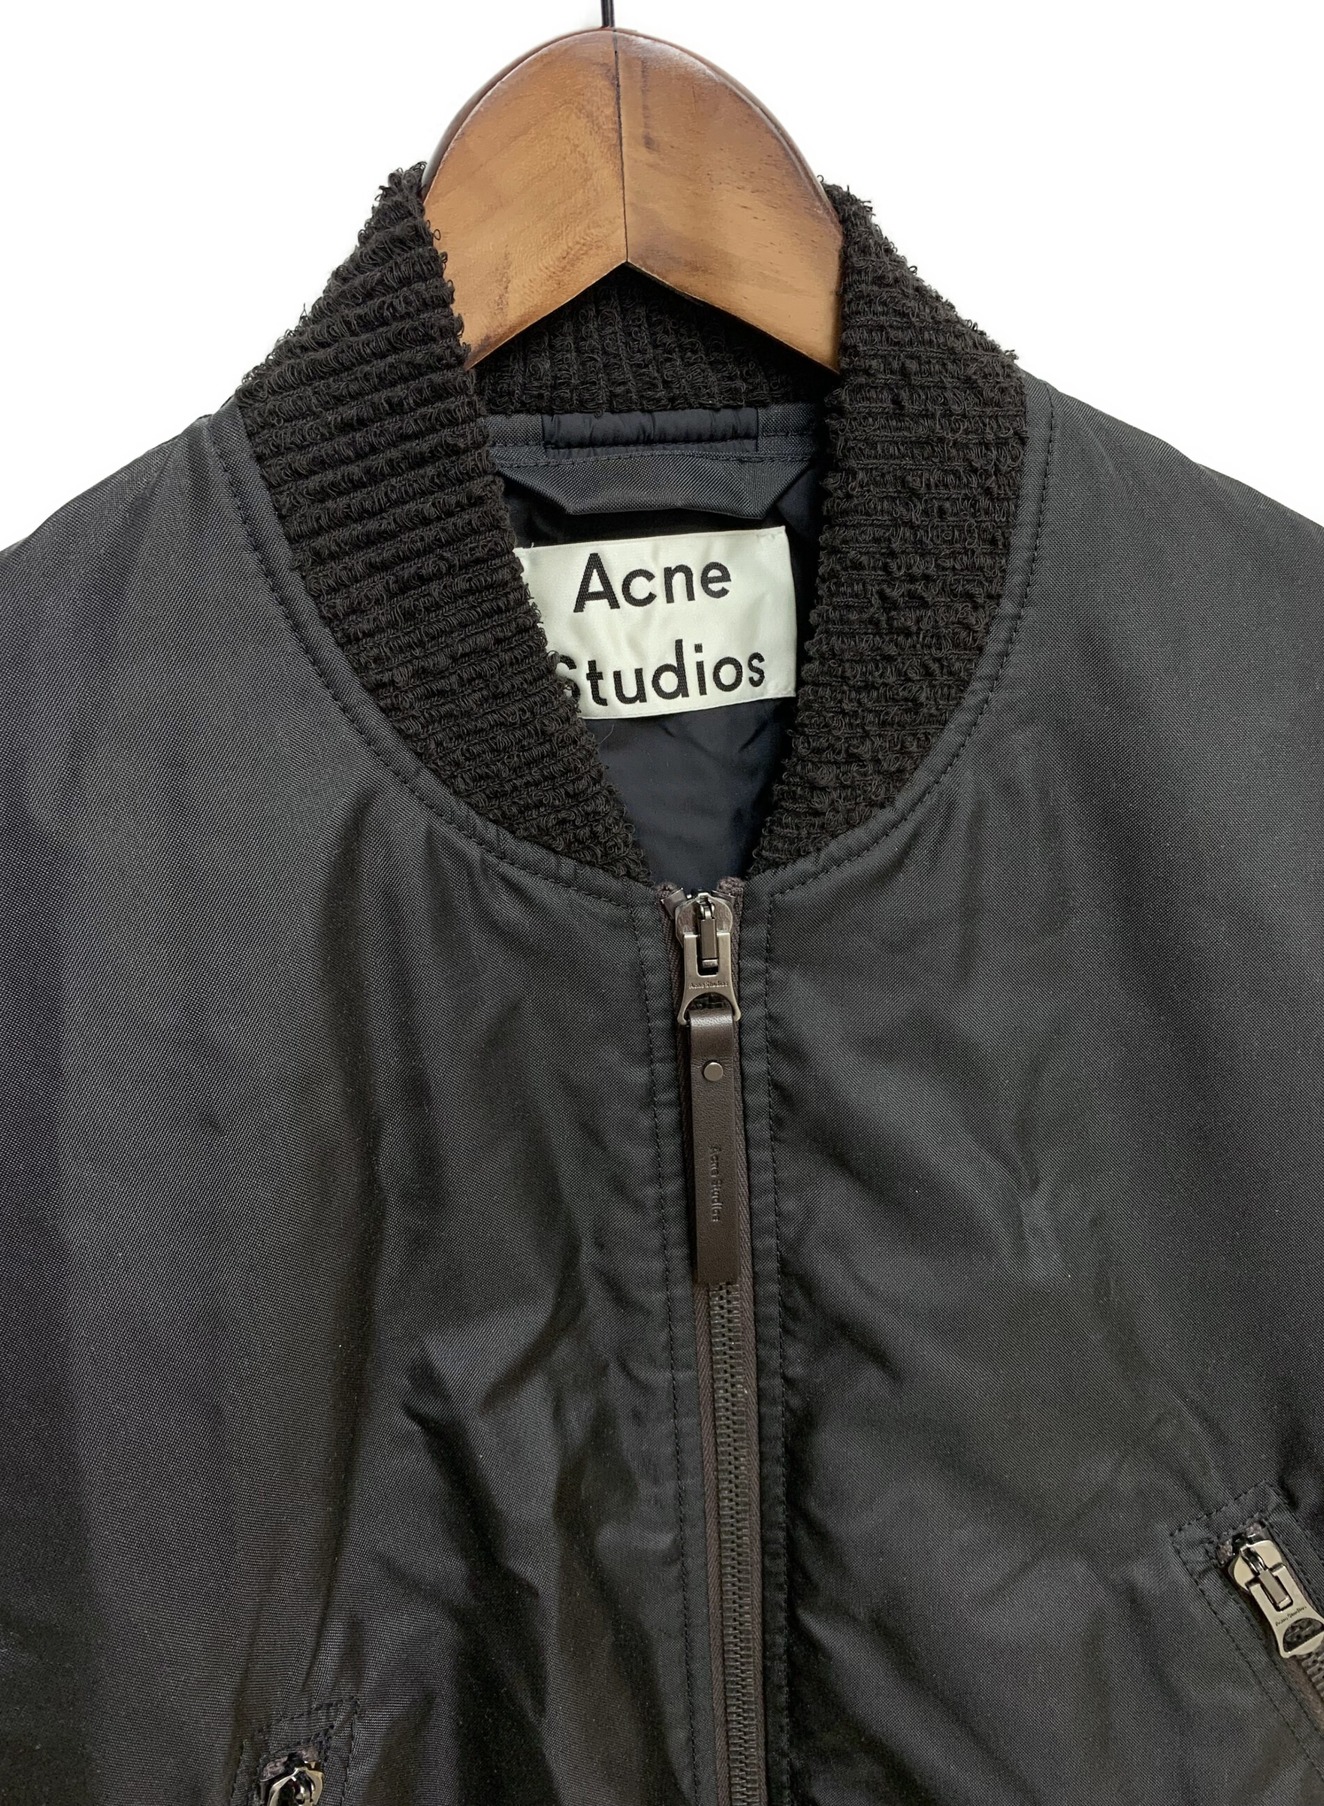 Acne studios (アクネストゥディオズ) NYLON BOMBER JACKET ブラック サイズ:46